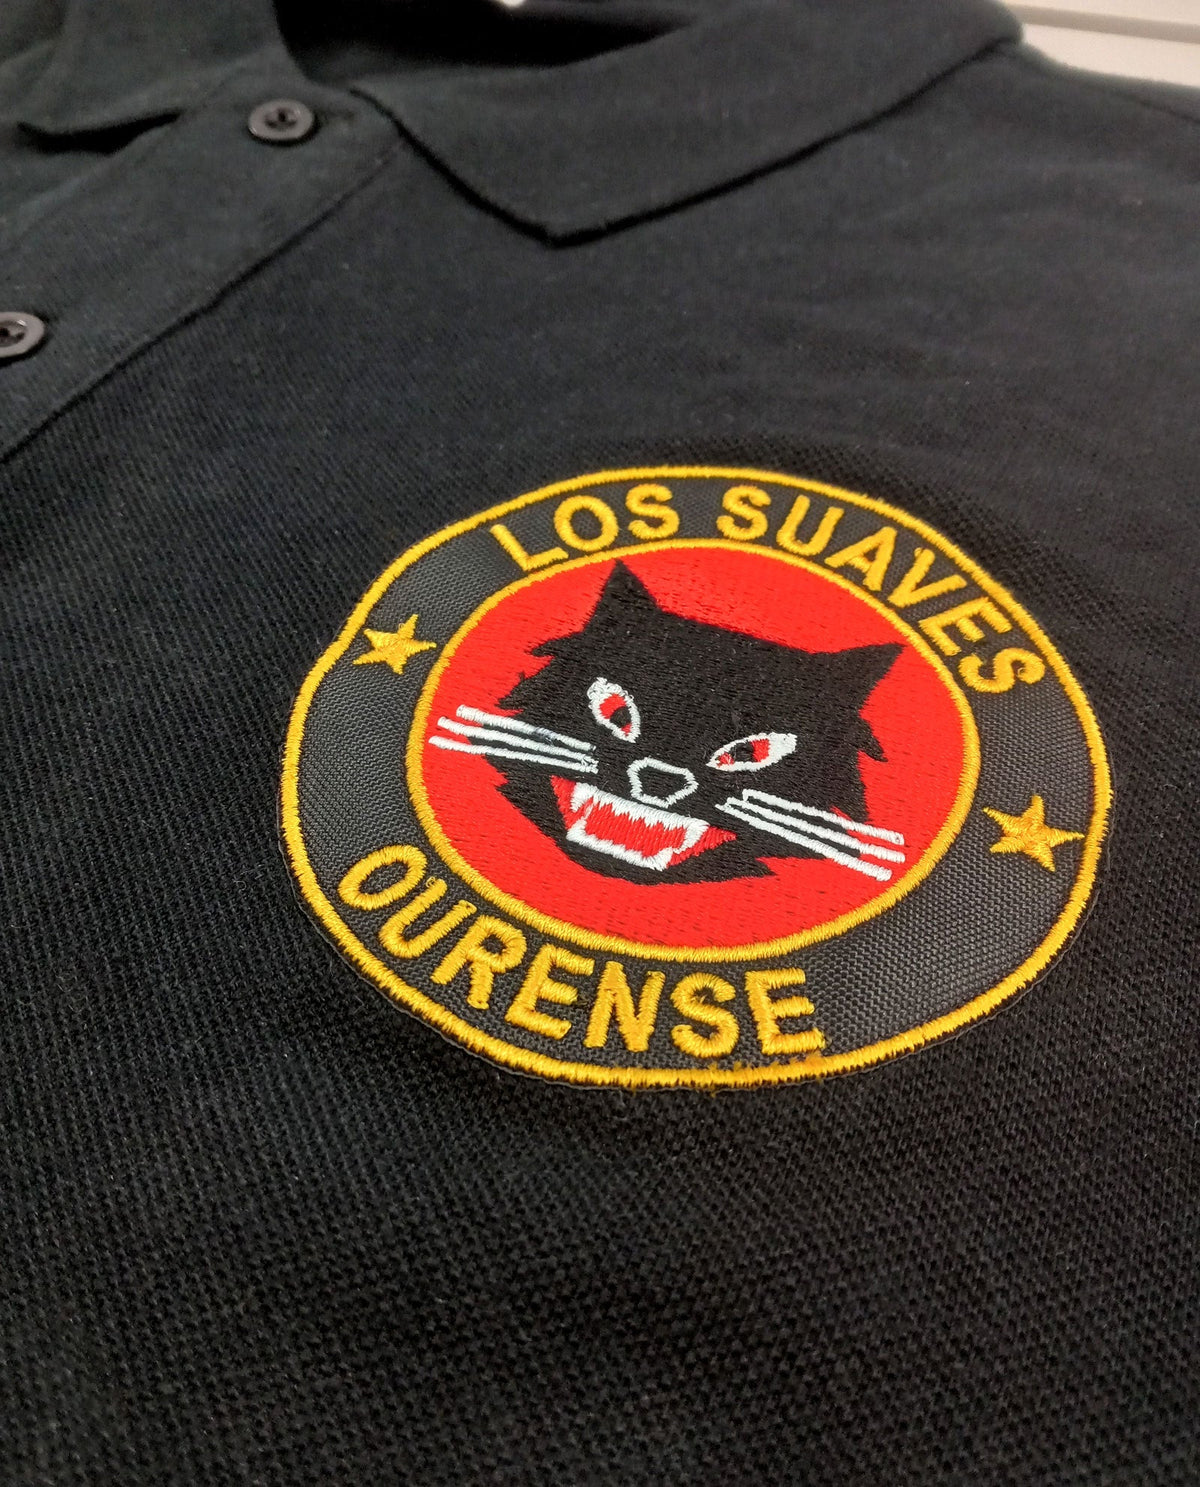 Polo Los Suaves Logo bordado - Rocktud - Los Suaves